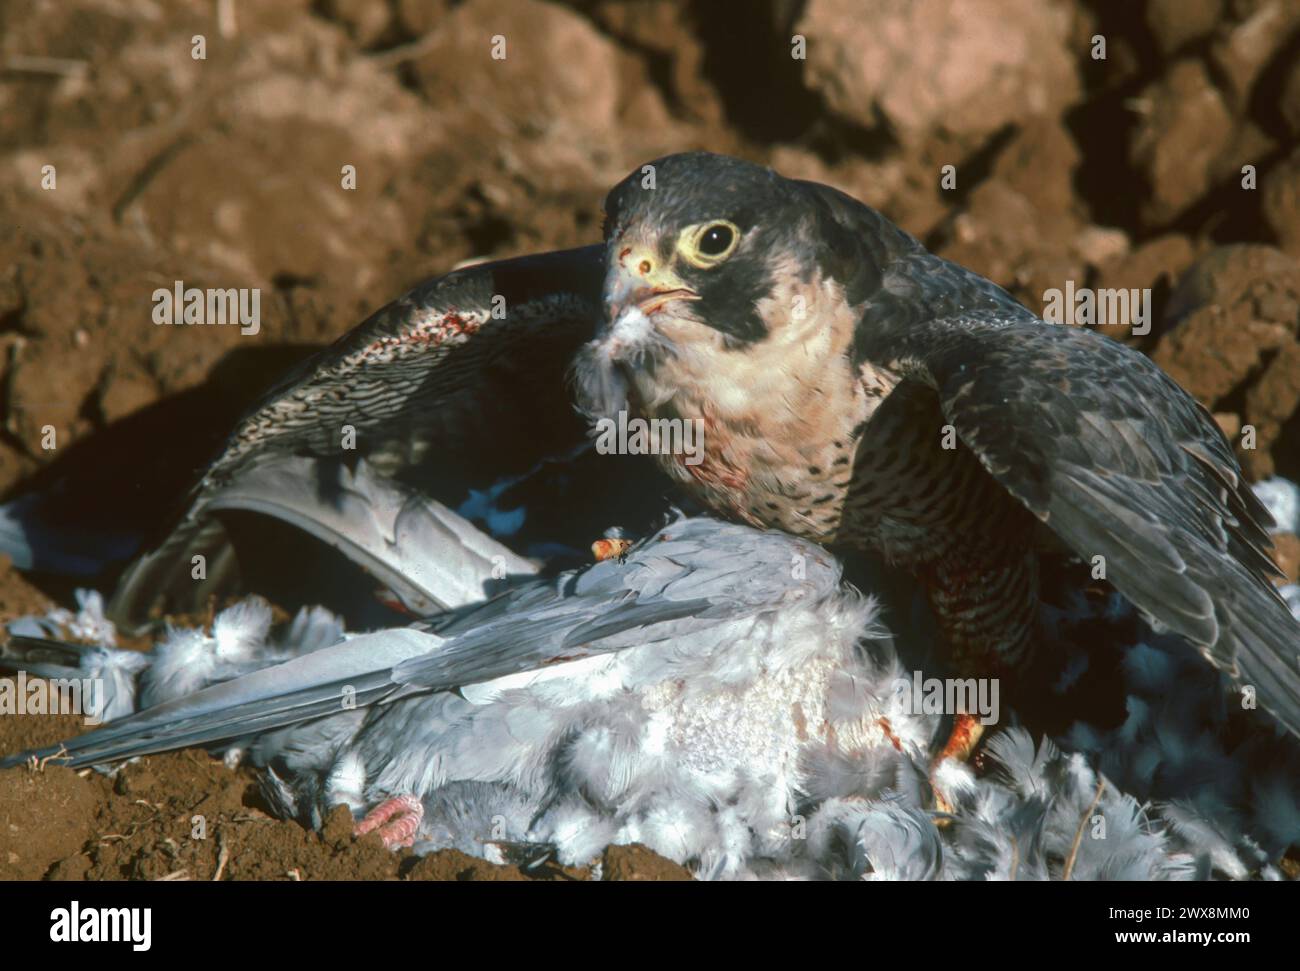 Adult peregrine falcon (Falco peregrinus) eating a pigeon Stock Photo